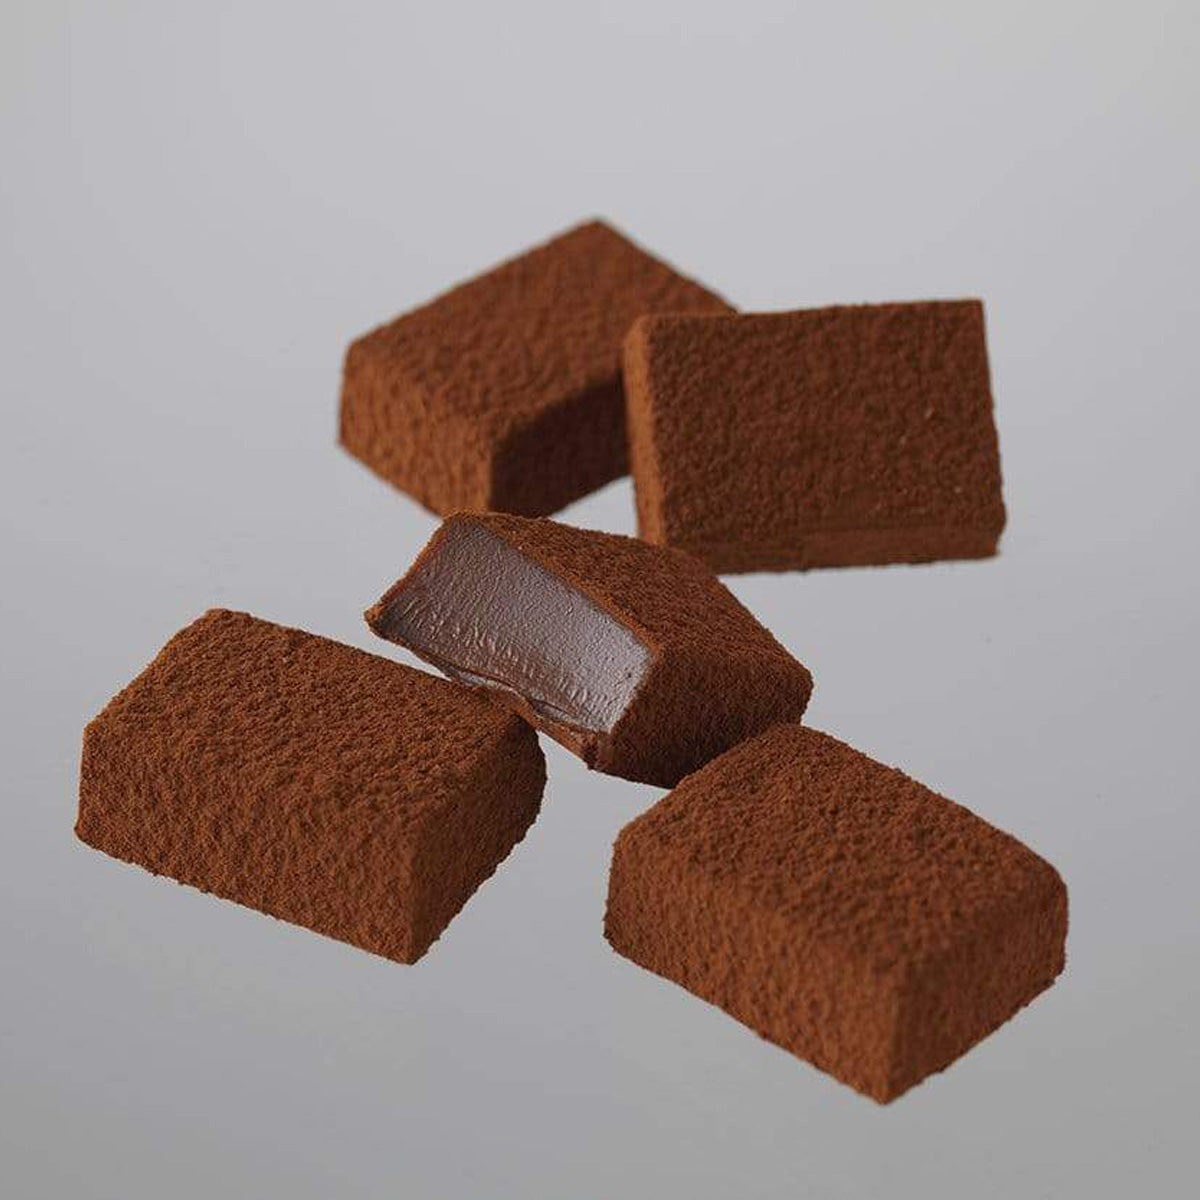 ROYCE' Chocolate - Nama Chocolate "Bitter" - Image shows brown blocks of chocolate with gray background.